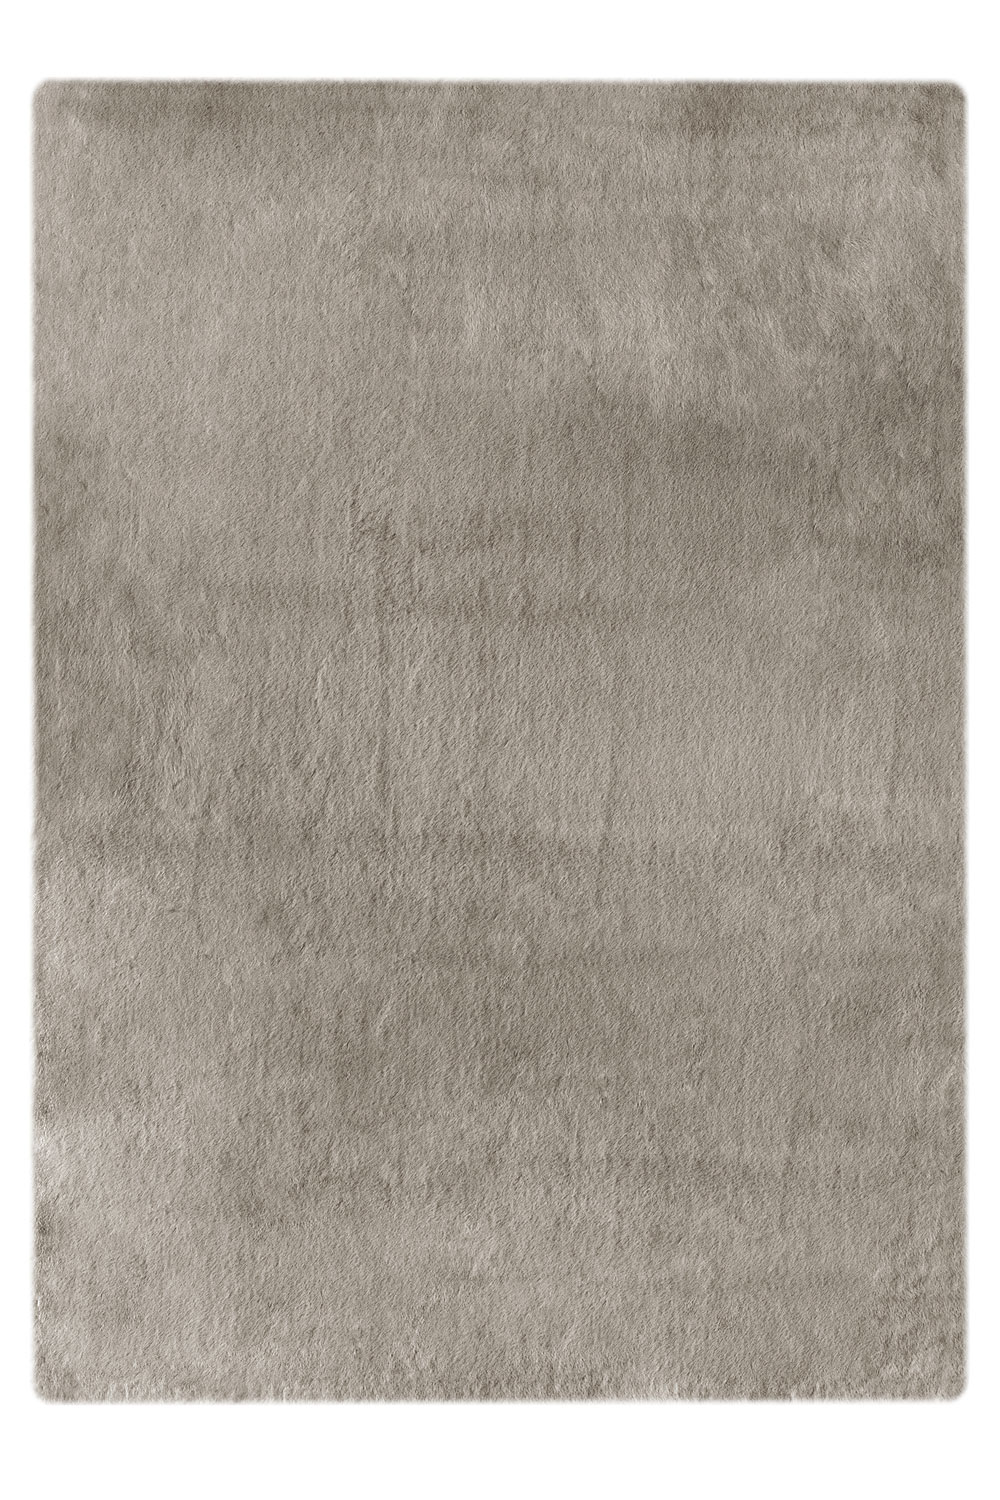 Kusový koberec HEAVEN 800 Taupe 120x170 cm